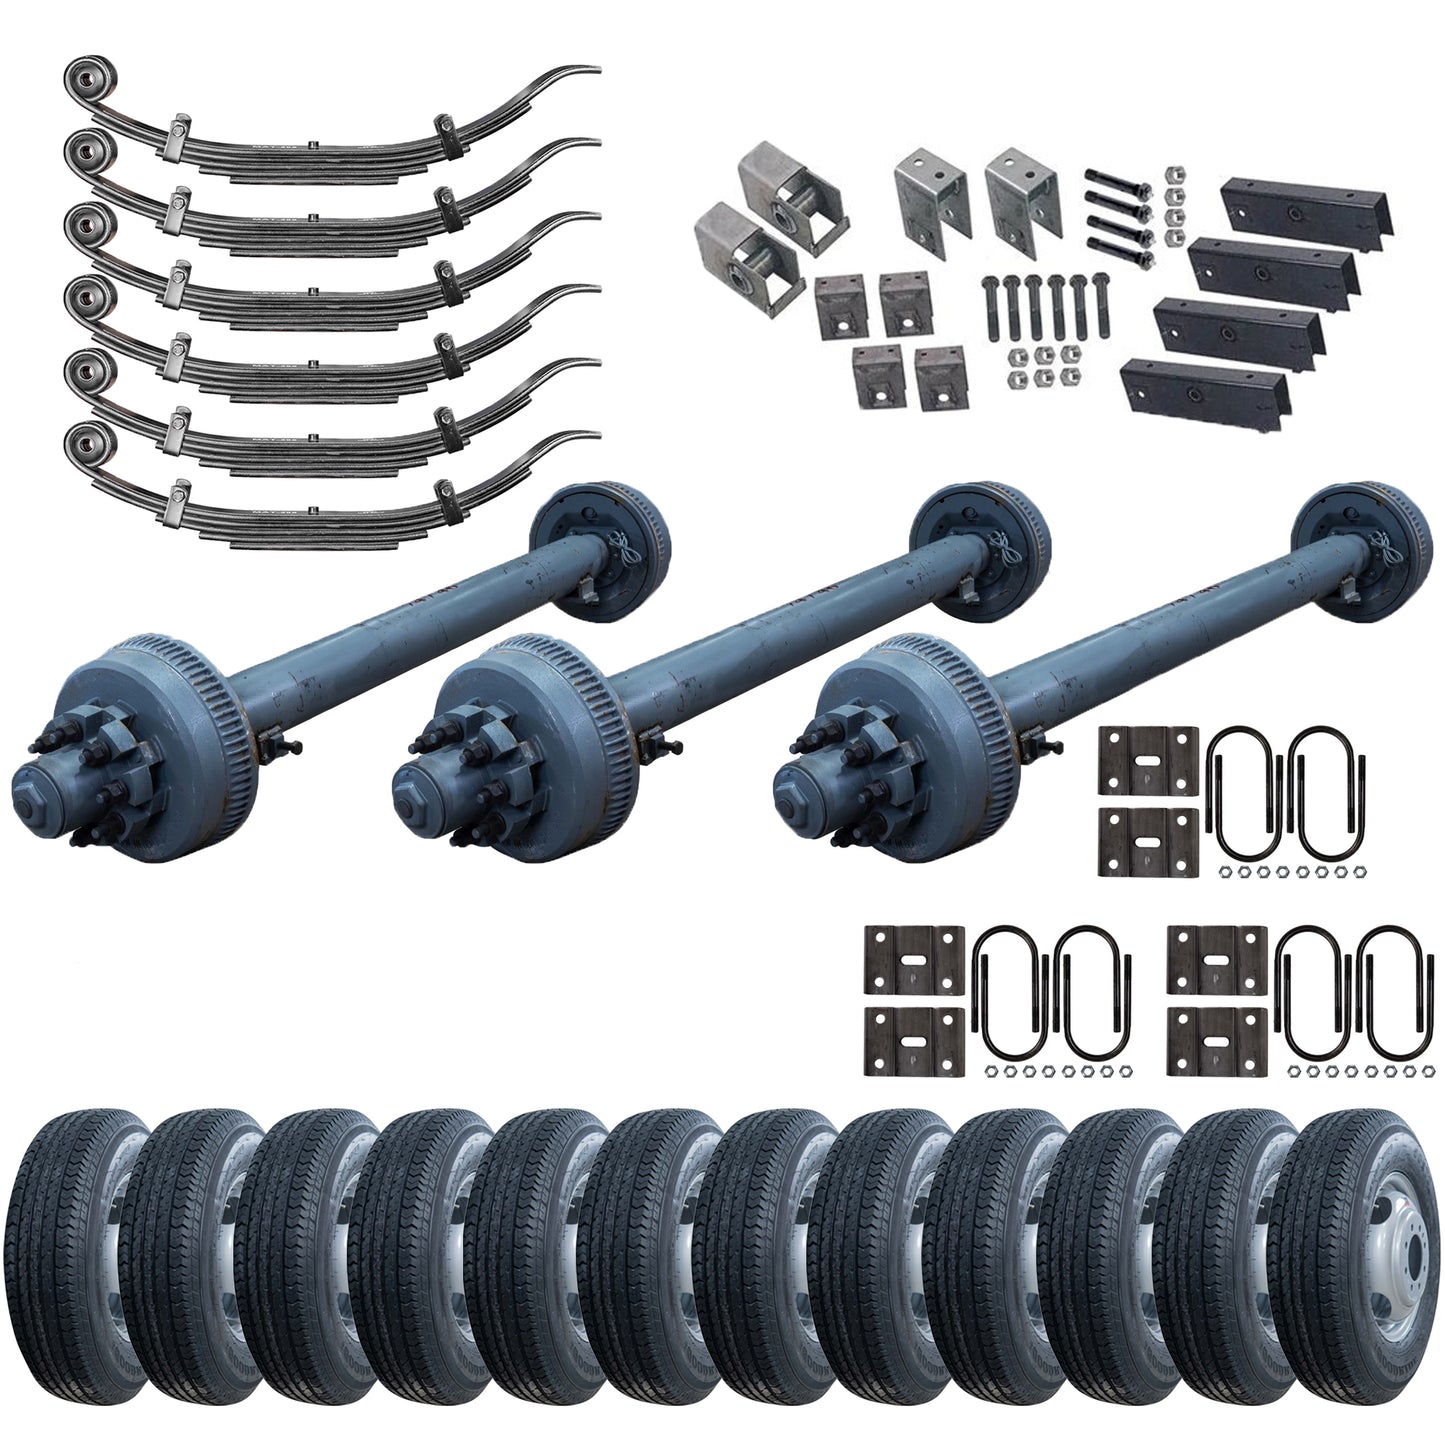 10,000 lb TK Triple Axle Trailer kit - Sprung - 30000 lb Capacity (Original Series)